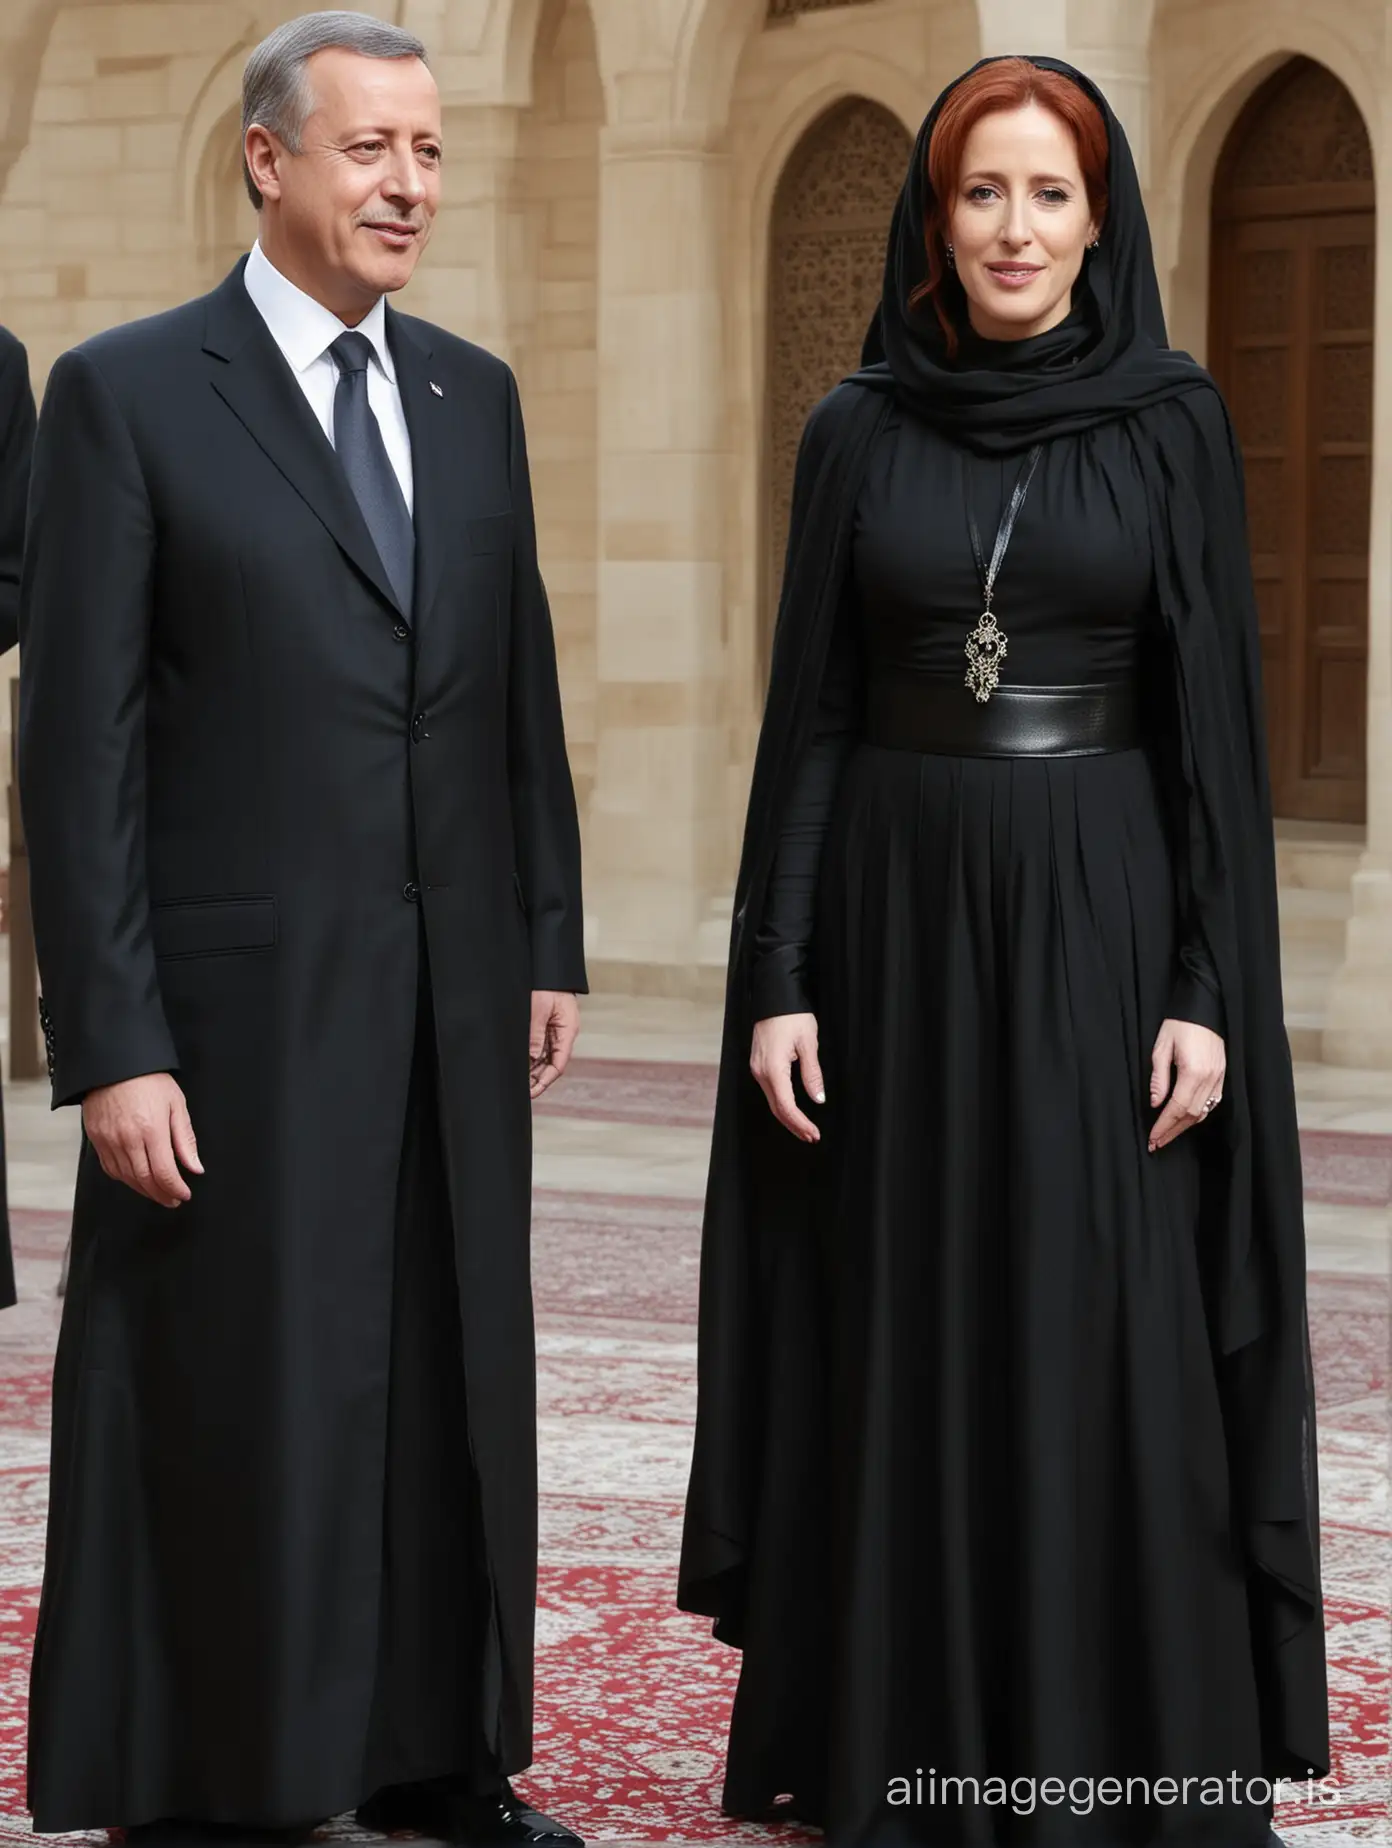 Gillian-Anderson-in-Black-Jilbab-with-President-Erdogan-Symbolic-Representation-of-Cultural-Exchange